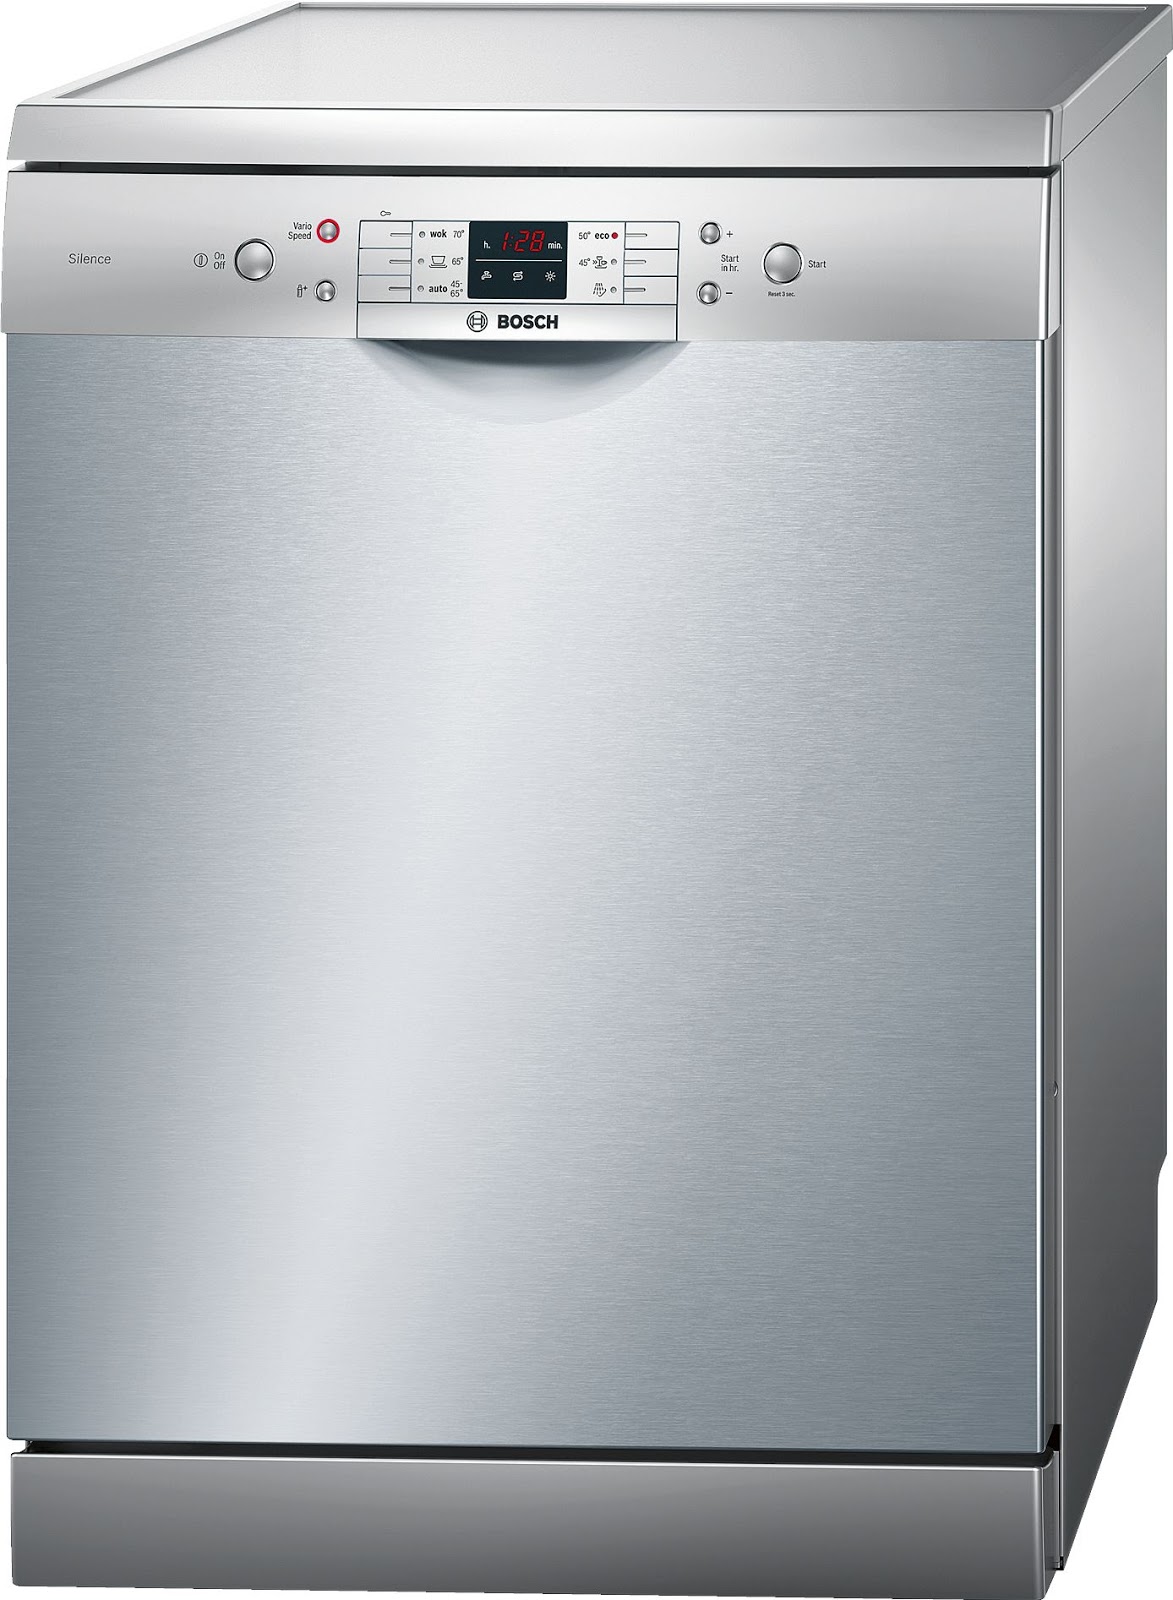 Bosch Series 6 Freestanding Dishwasher Review | CAMEMBERU